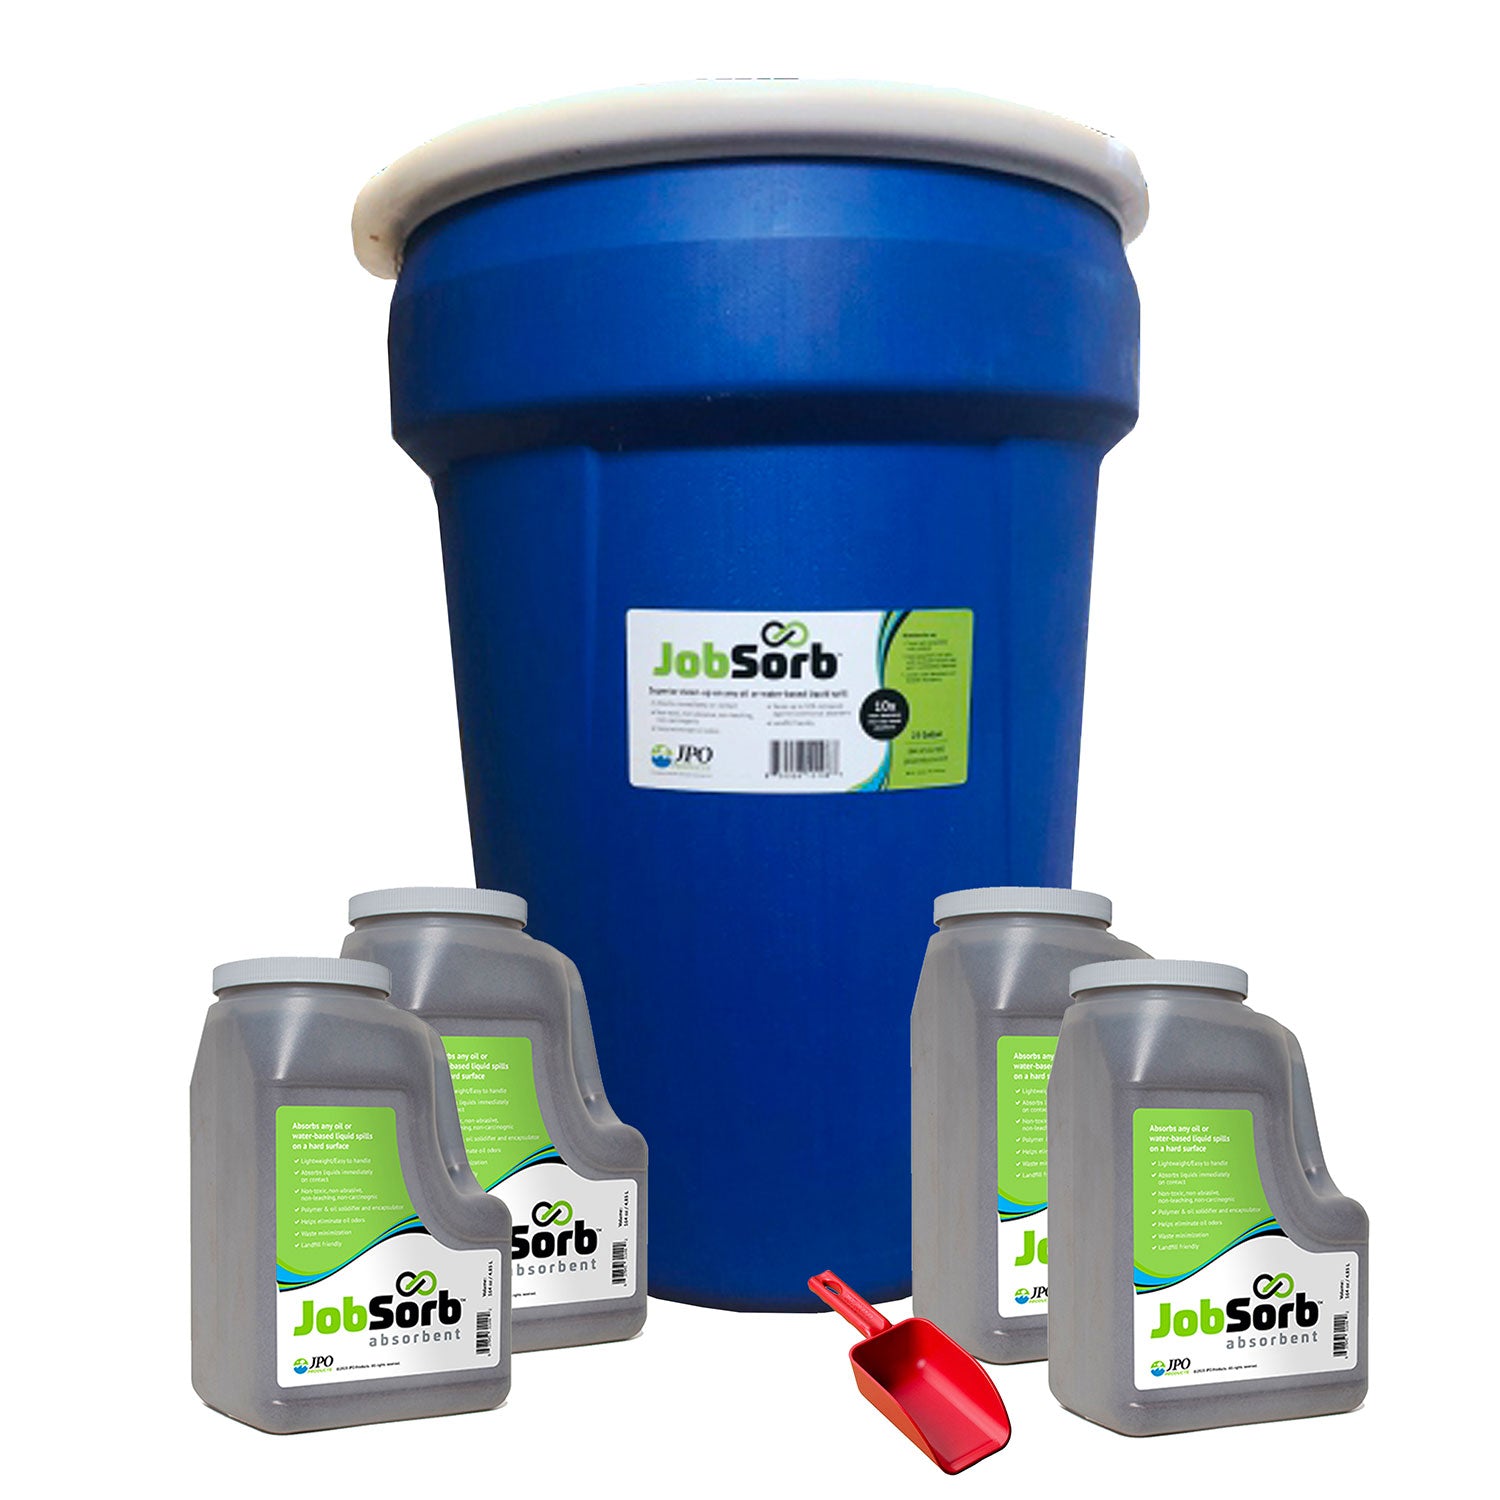 jobsorb-absorbent-material-25-gallon-kit